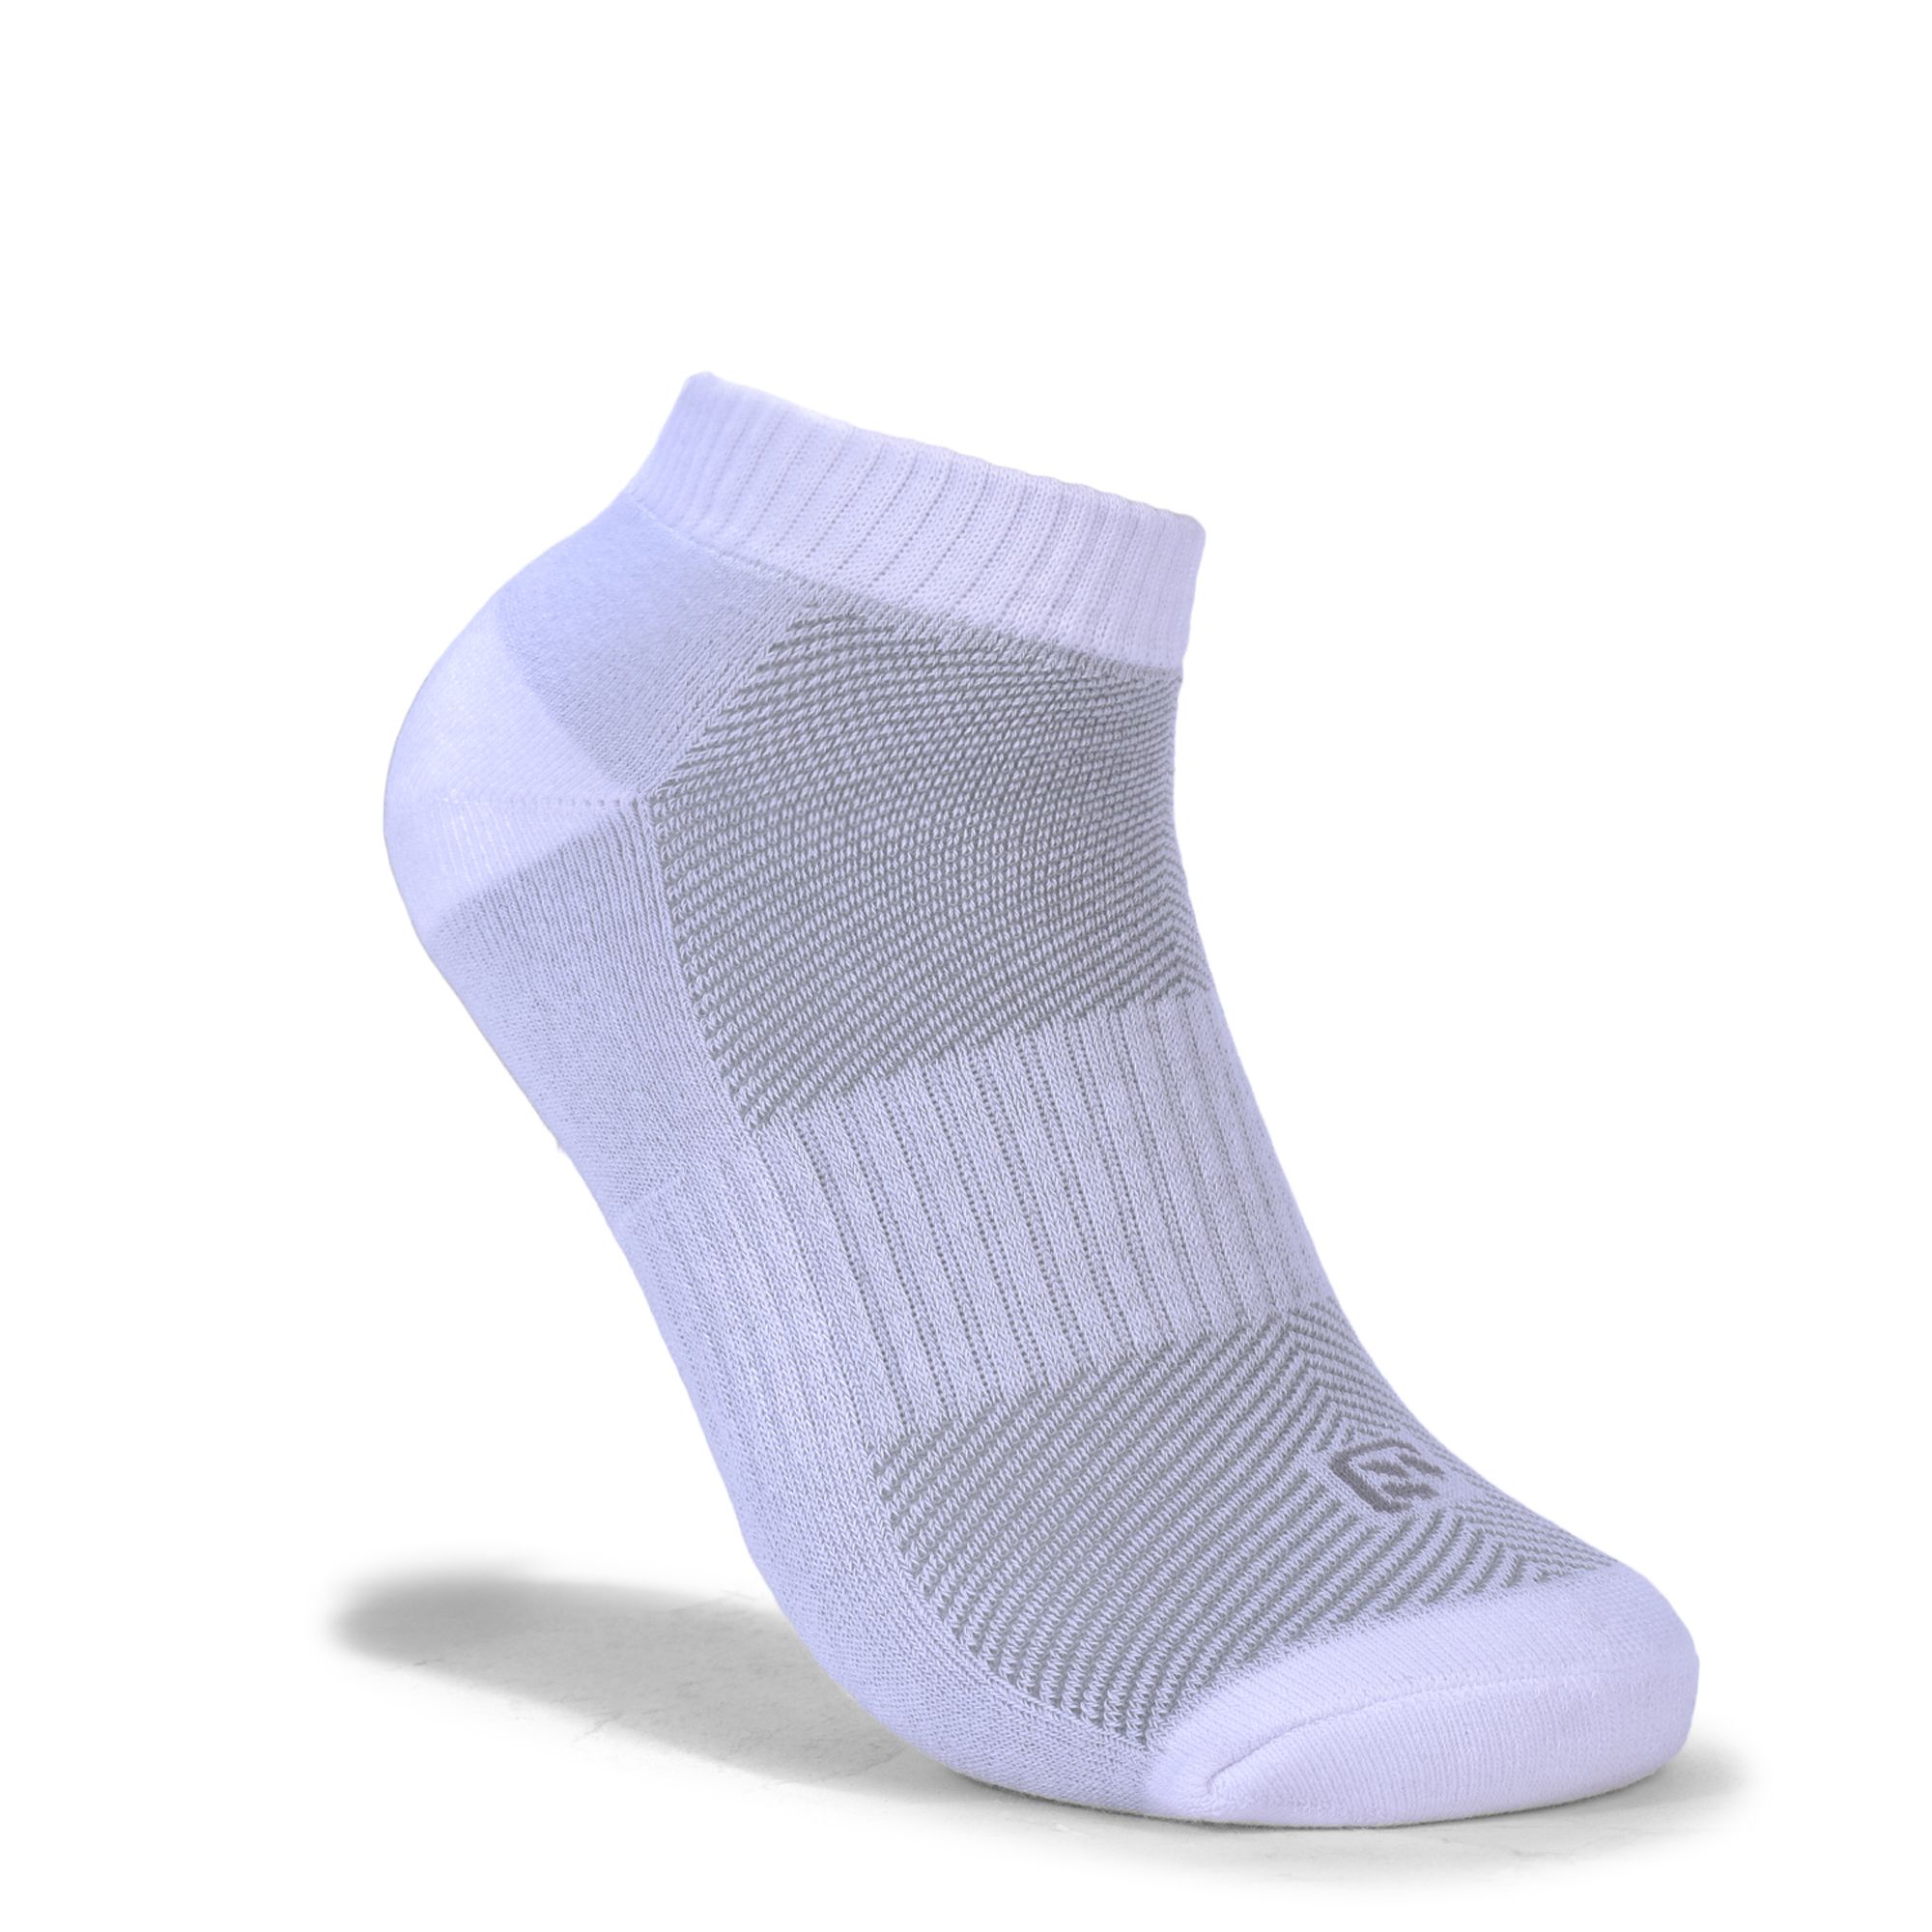 Black/White/Medium grey ankle socks